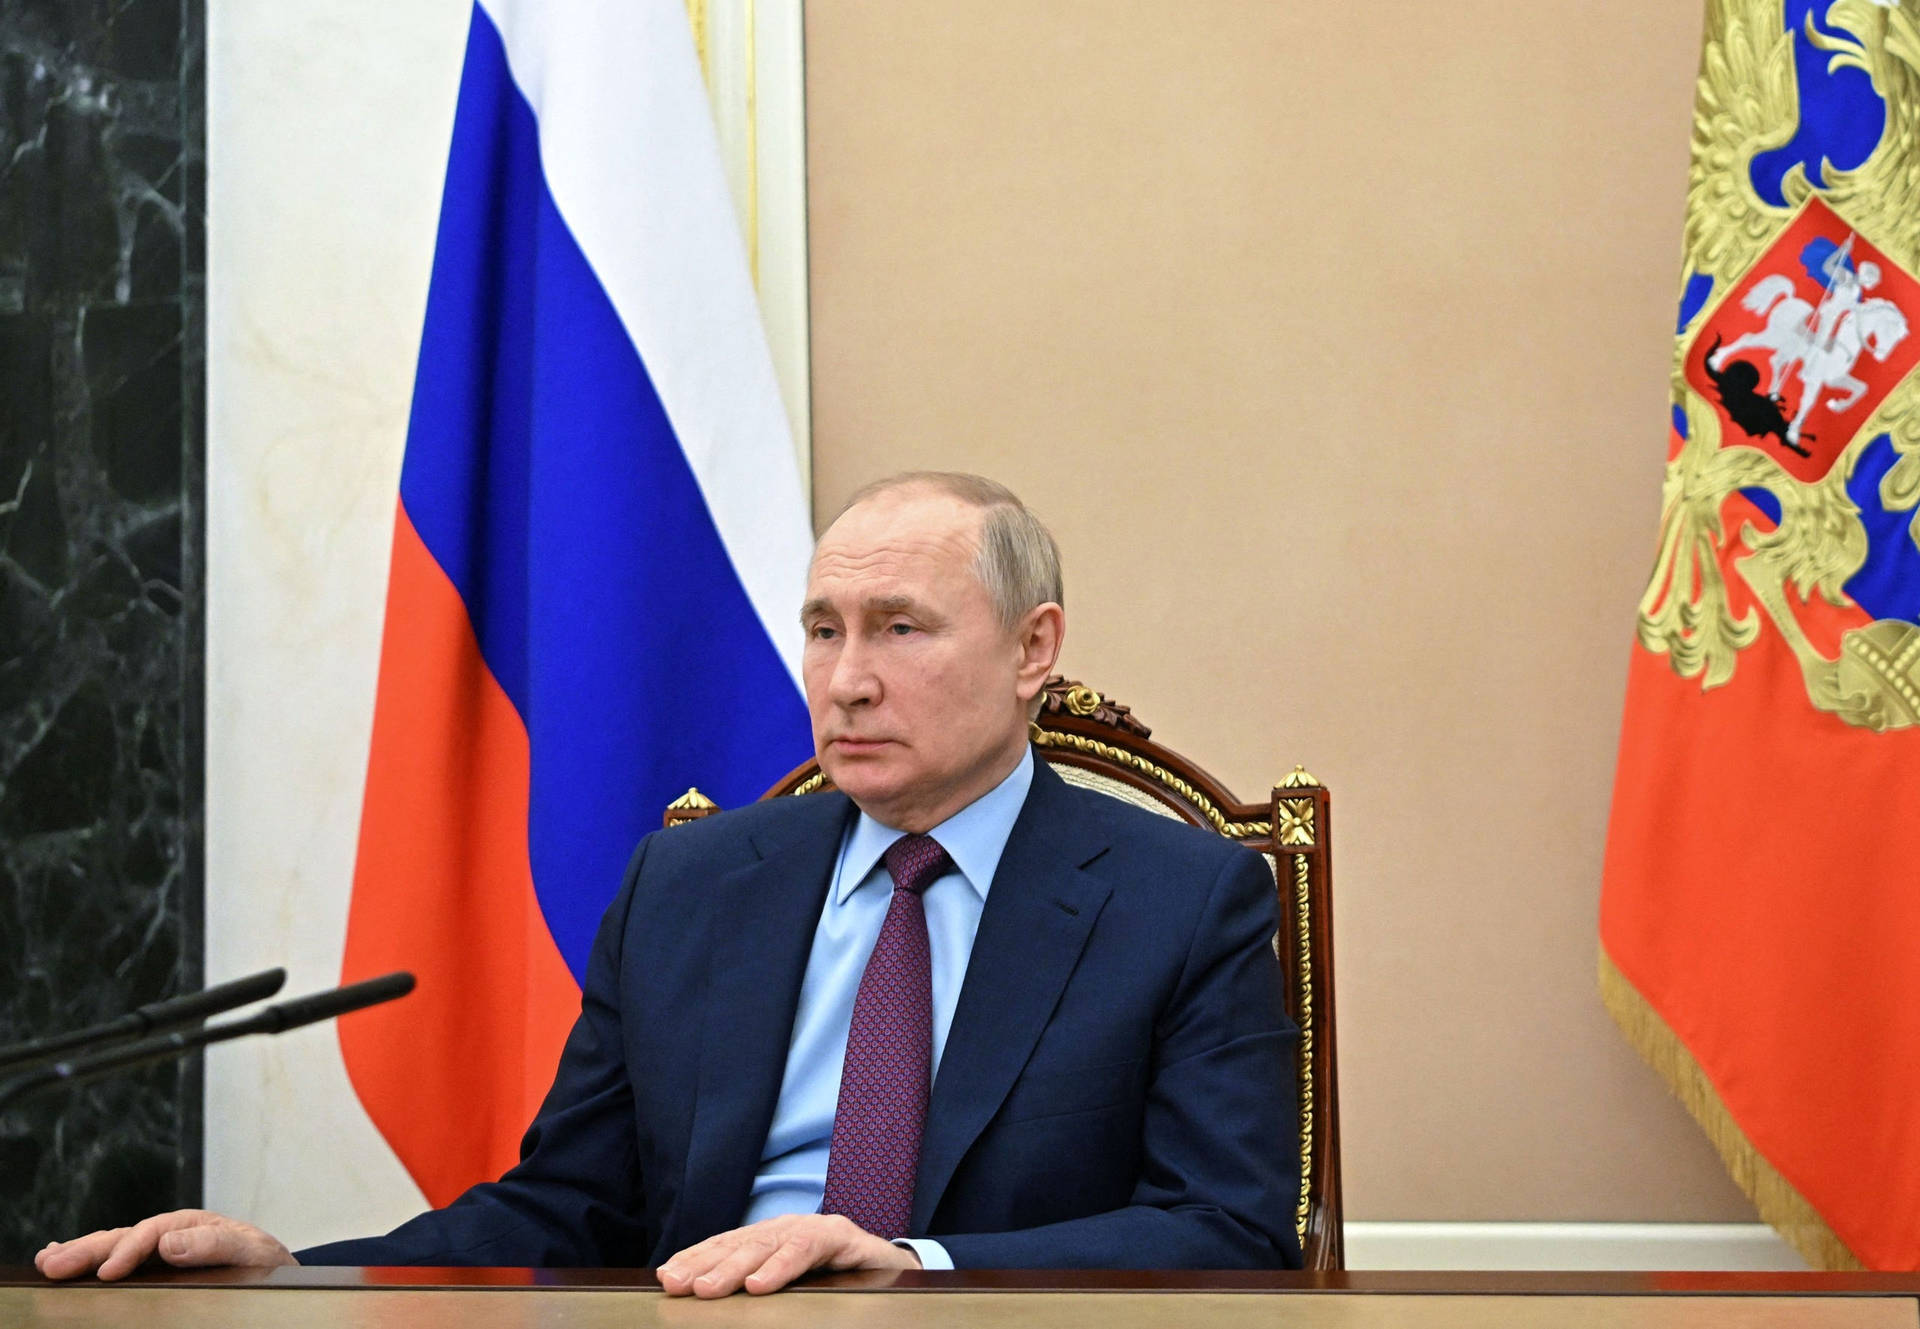 Vladimir Putin With Calm Face Background